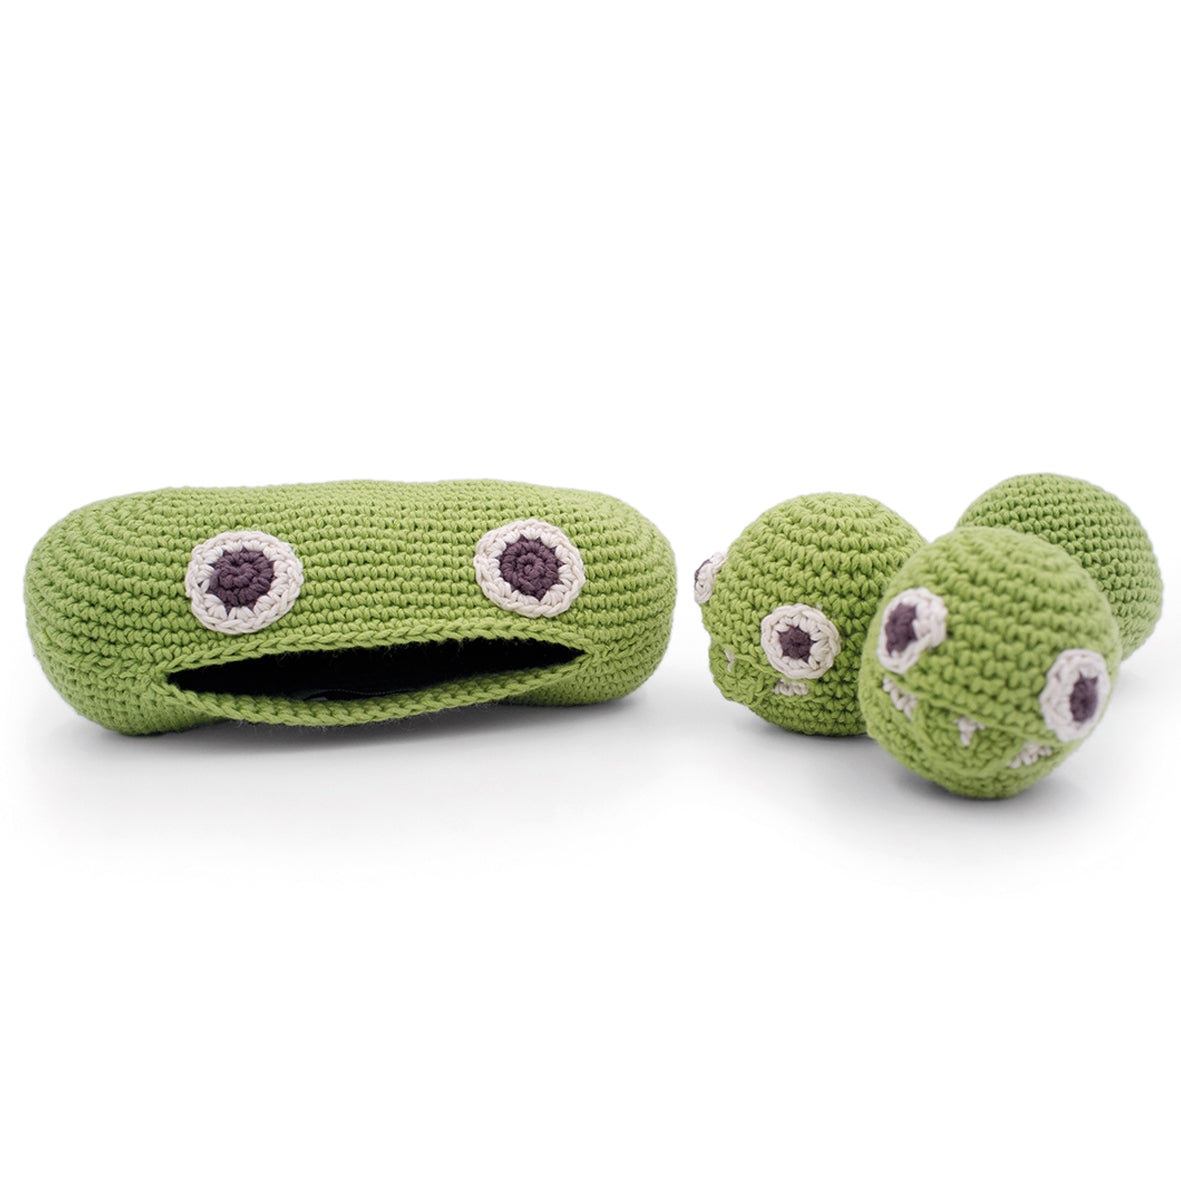 Myum MyuM Green Pea Family Rattle Toy Soft toys